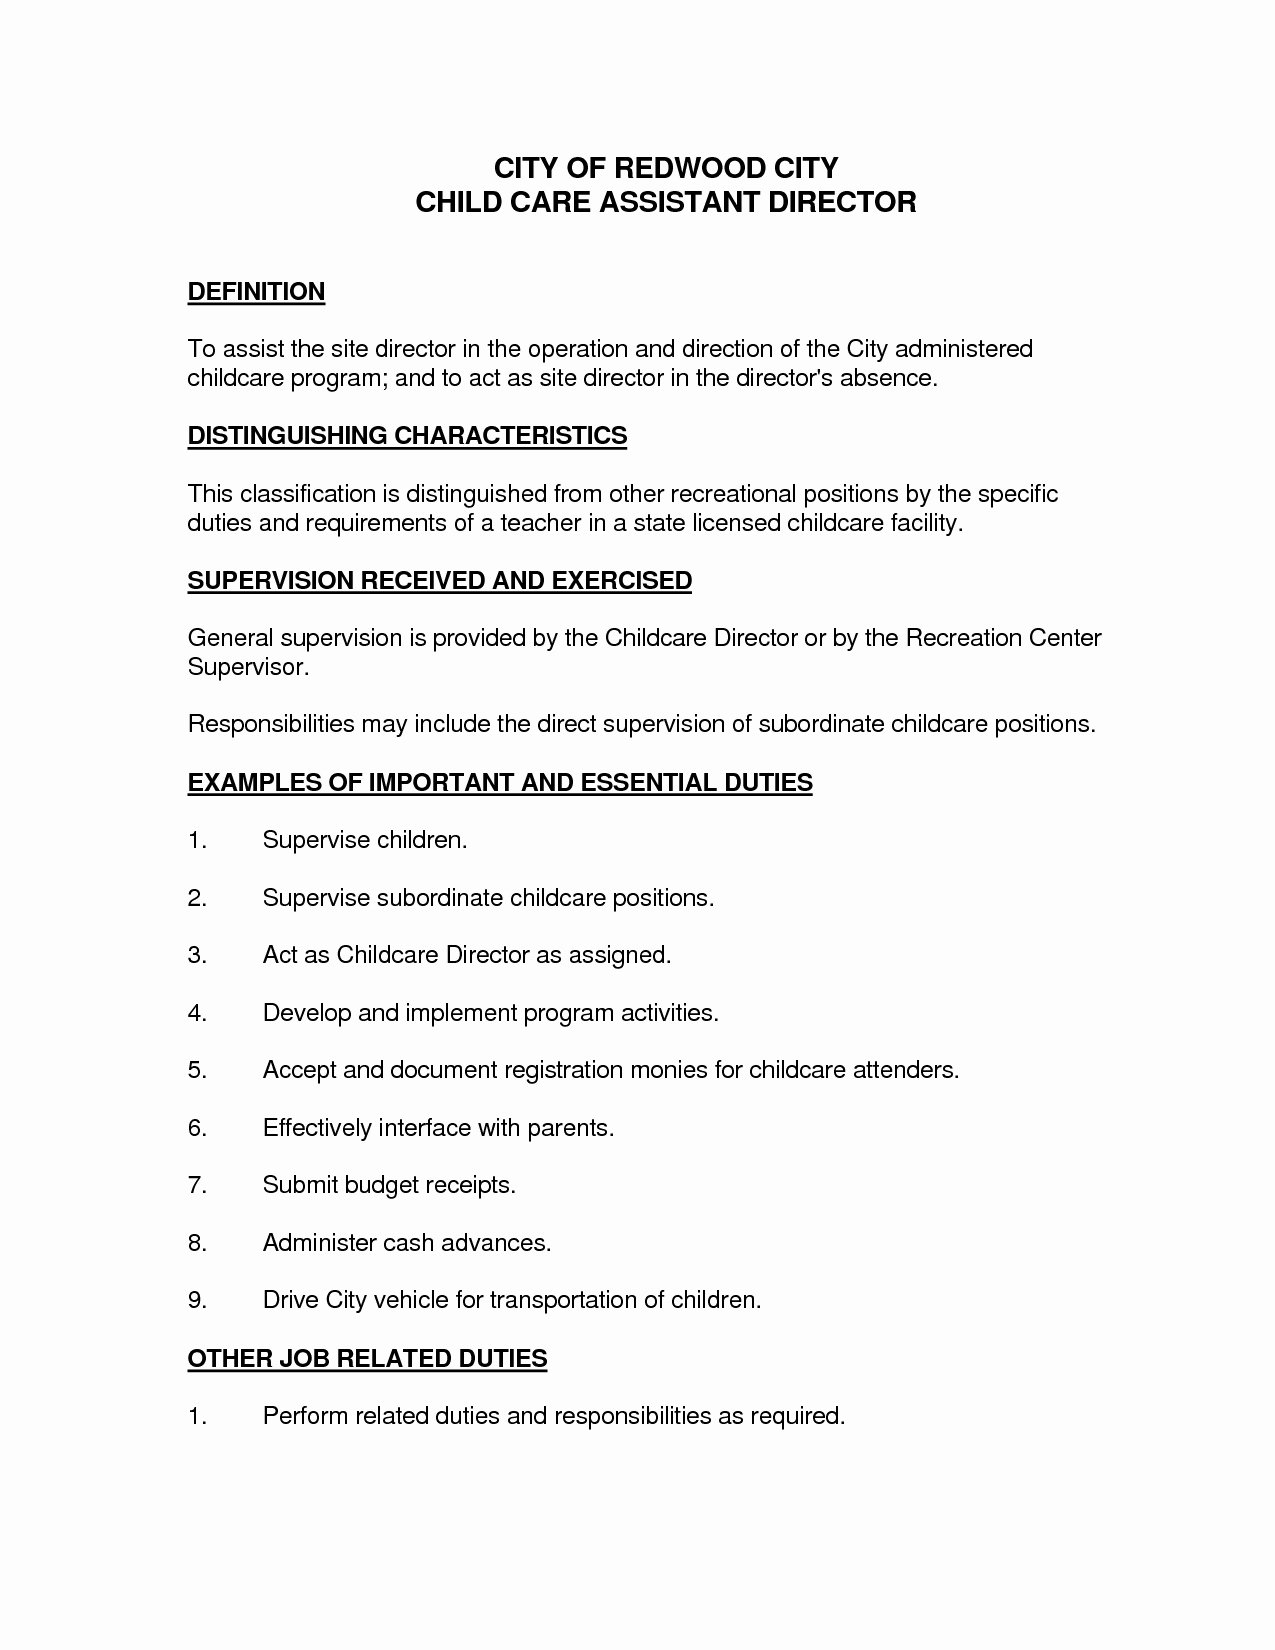 Sample Resume for Child Care Best Of Child Care Provider Job Descriptions